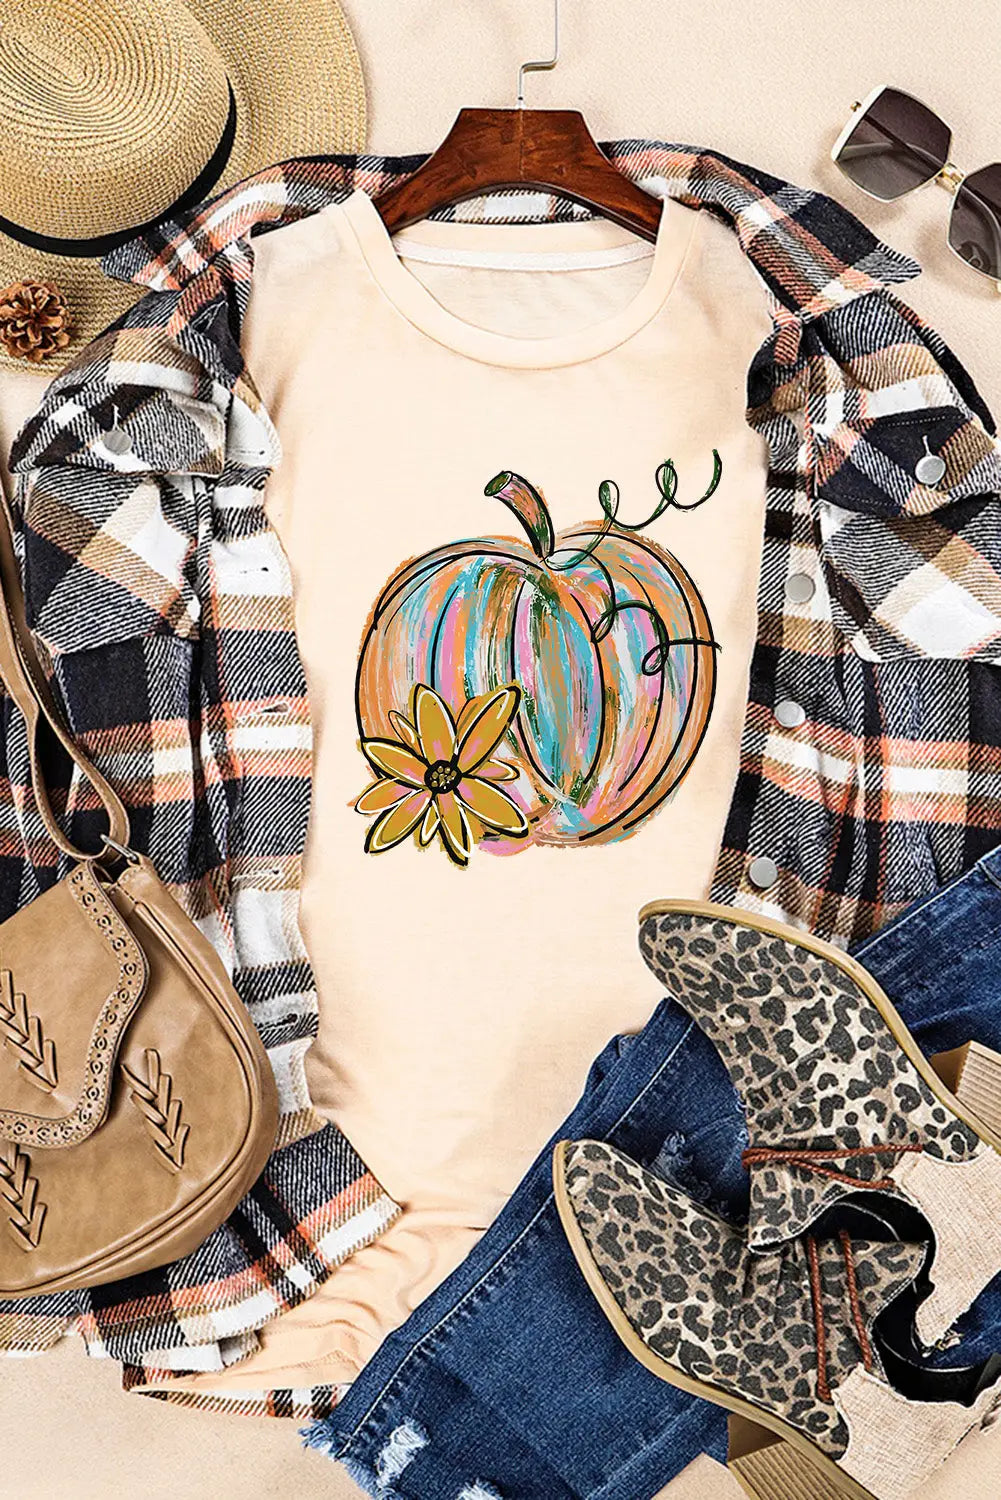 Khaki pumpkin with flower graphic t shirt - t-shirts